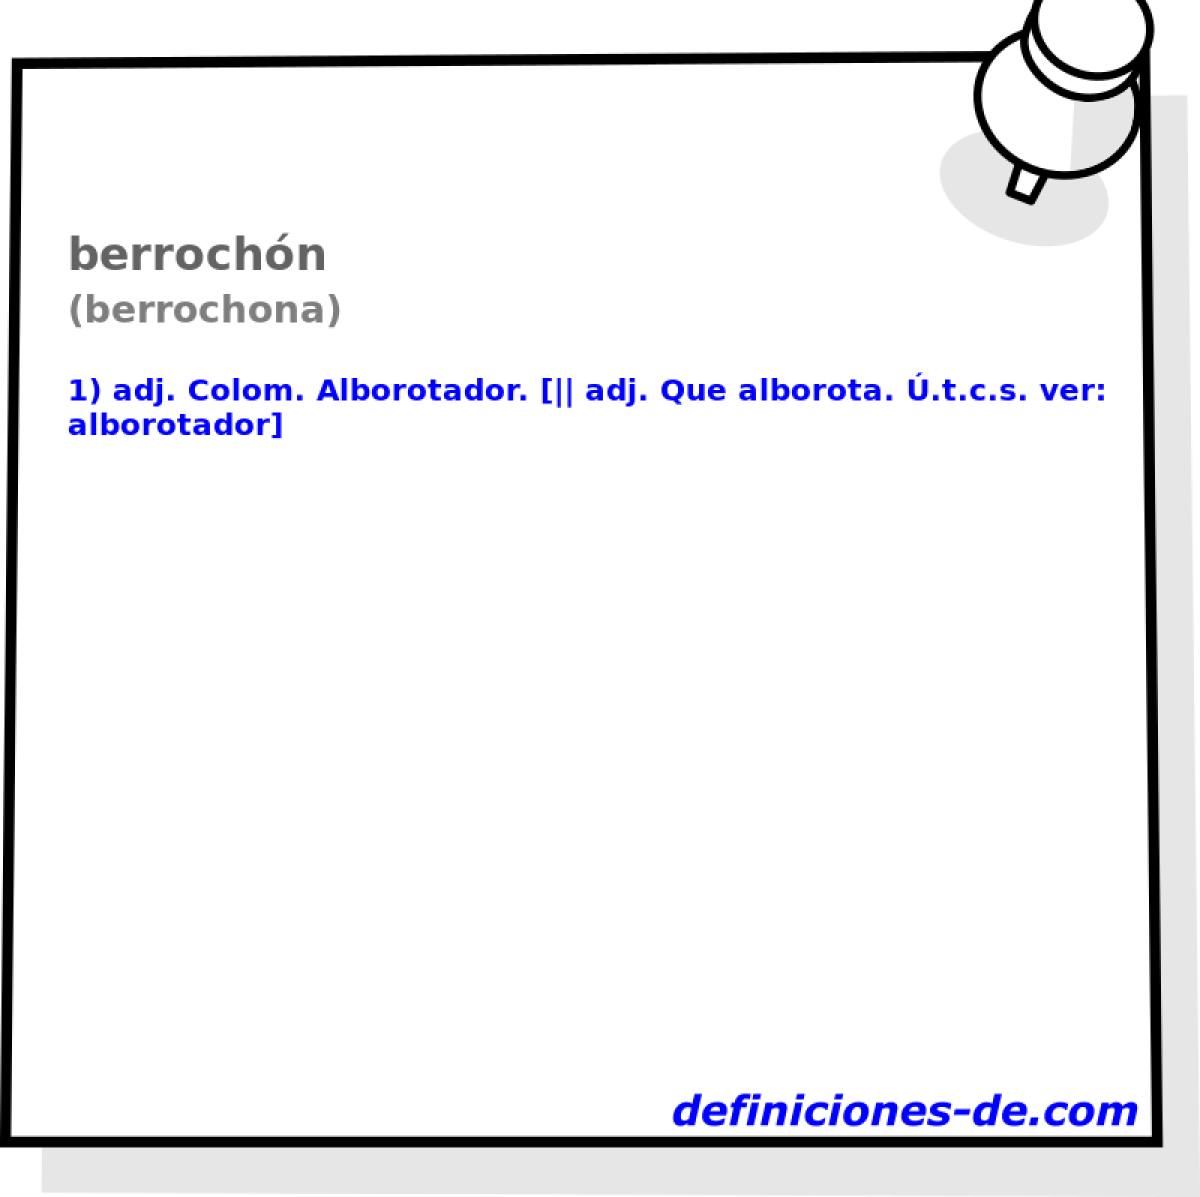 berrochn (berrochona)